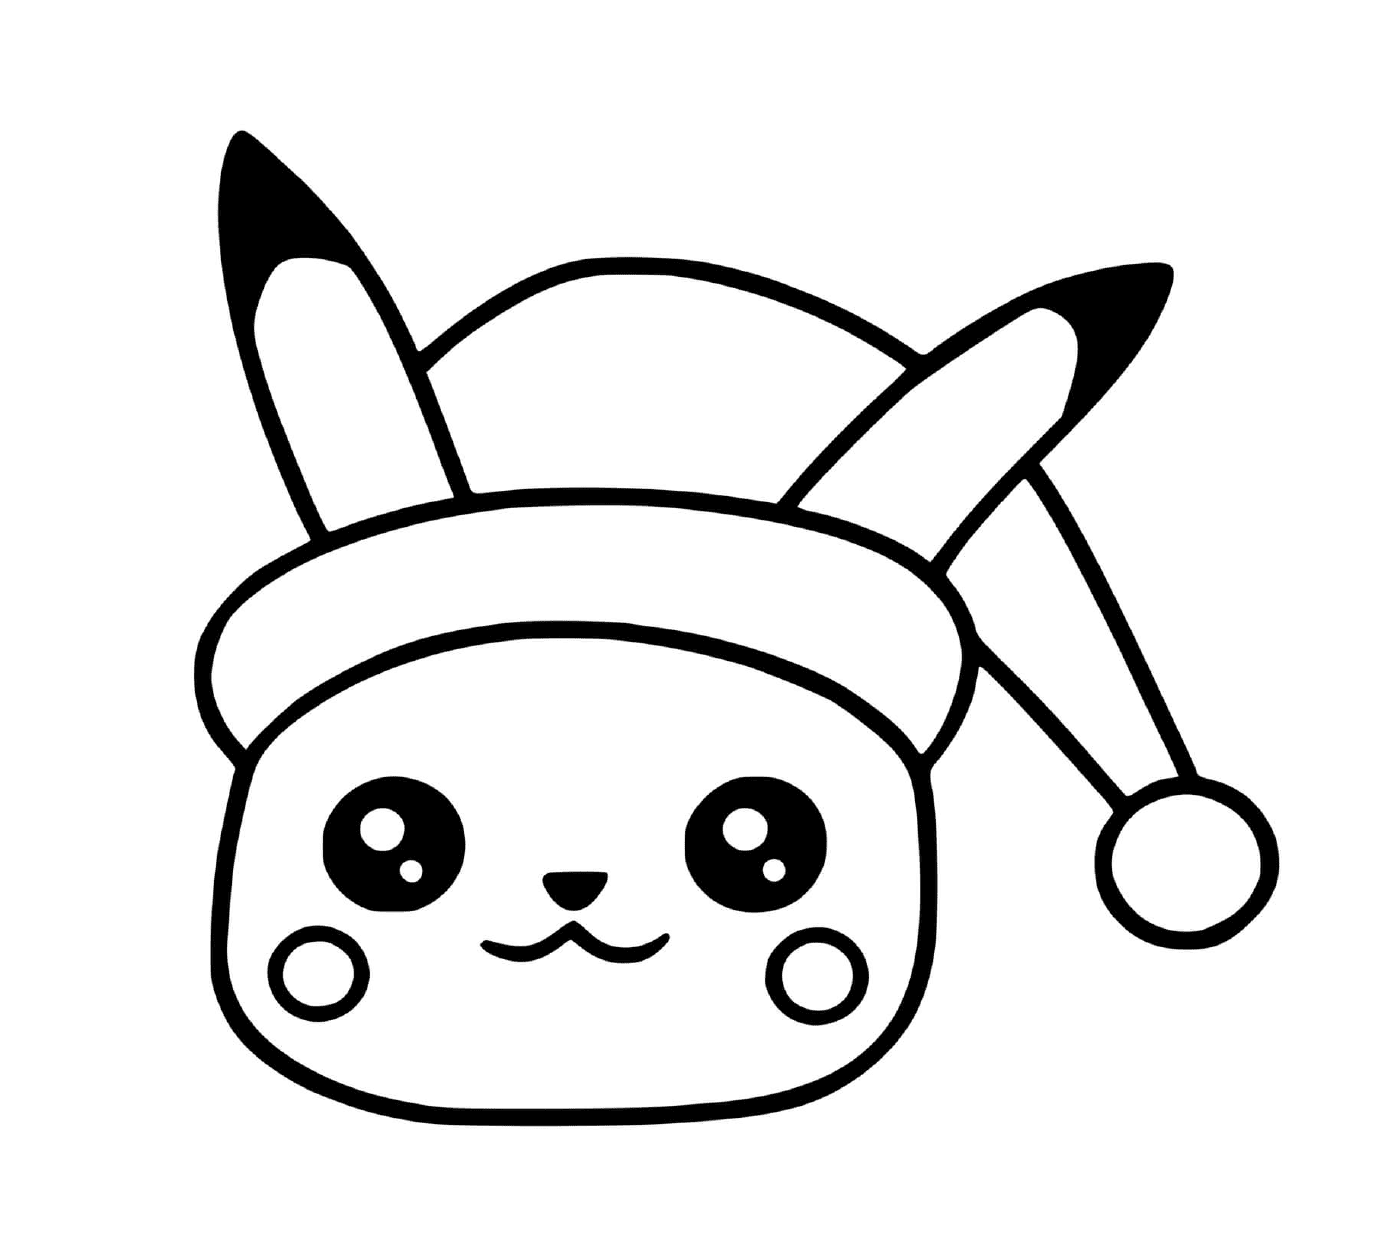  Pikachu Christmas, kawaii and festive 